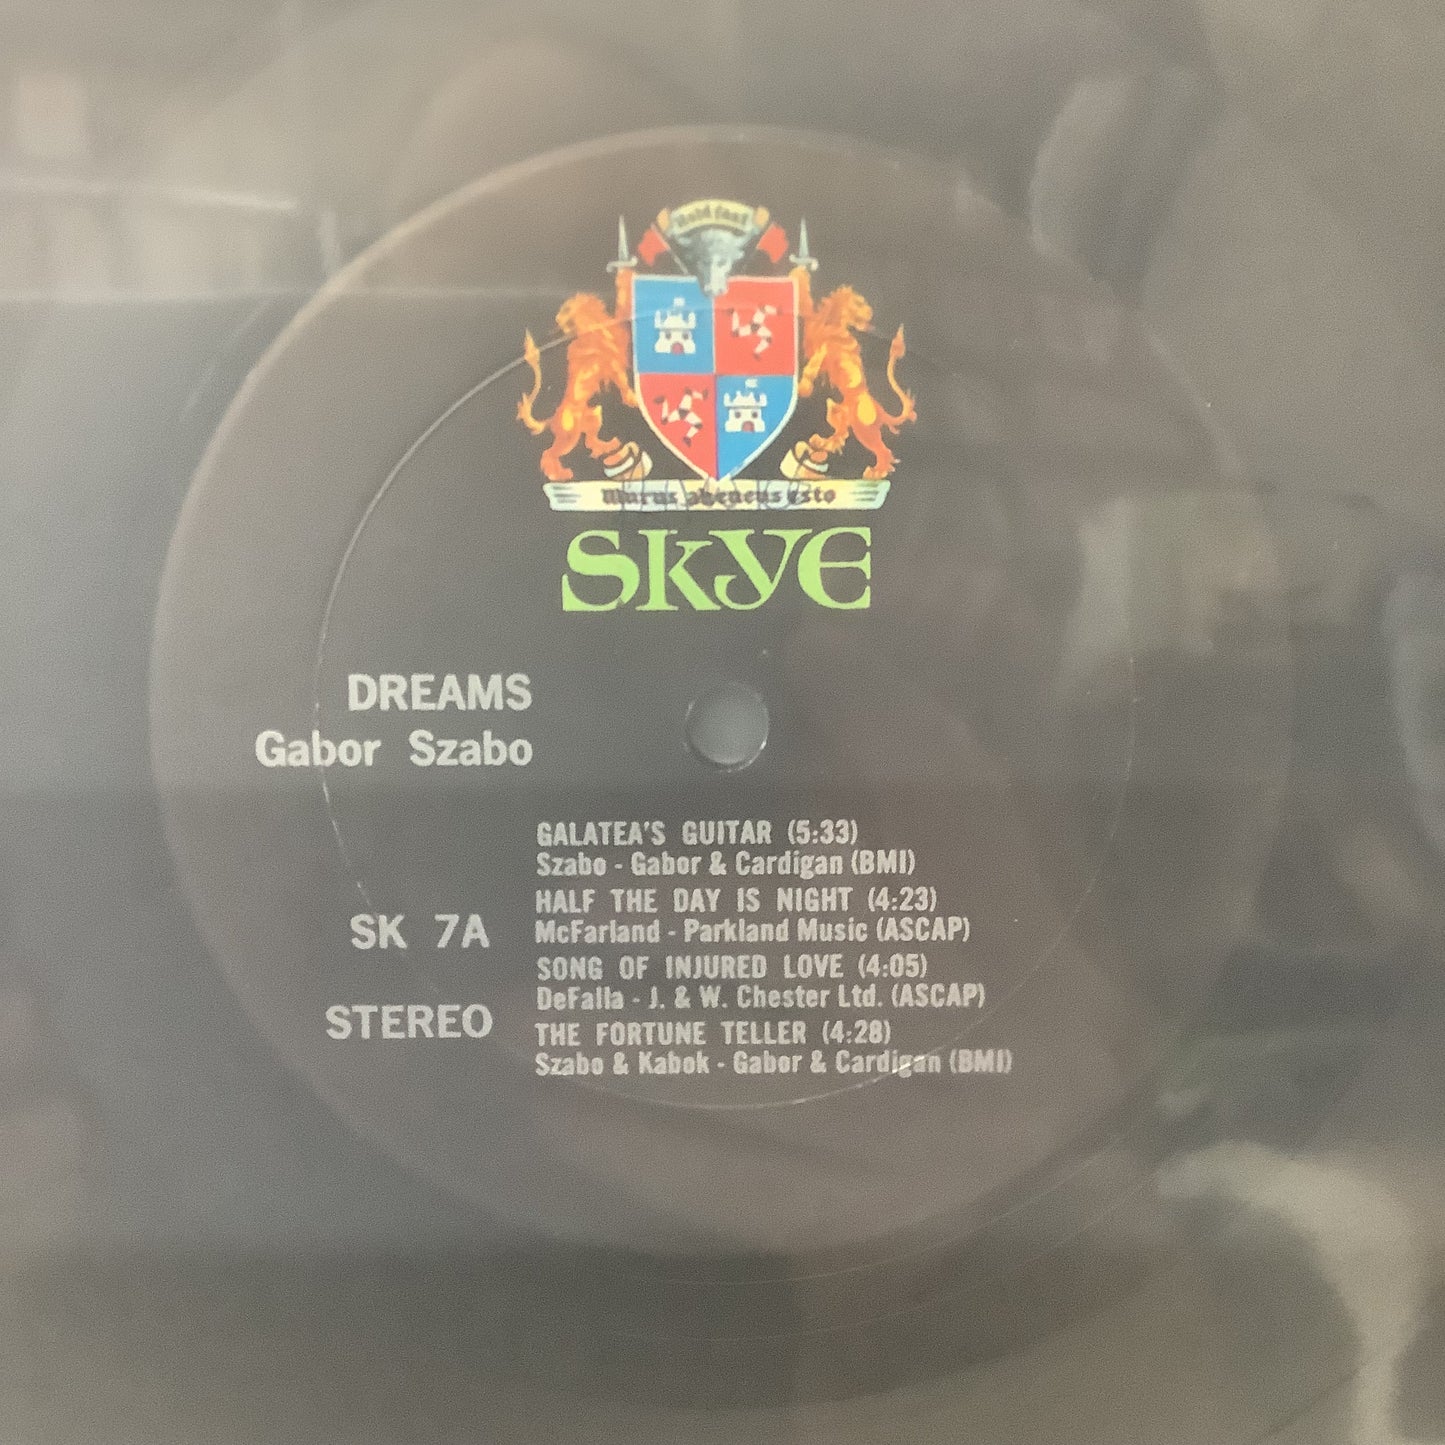 Gabor Szabo - Dreams - Skye LP